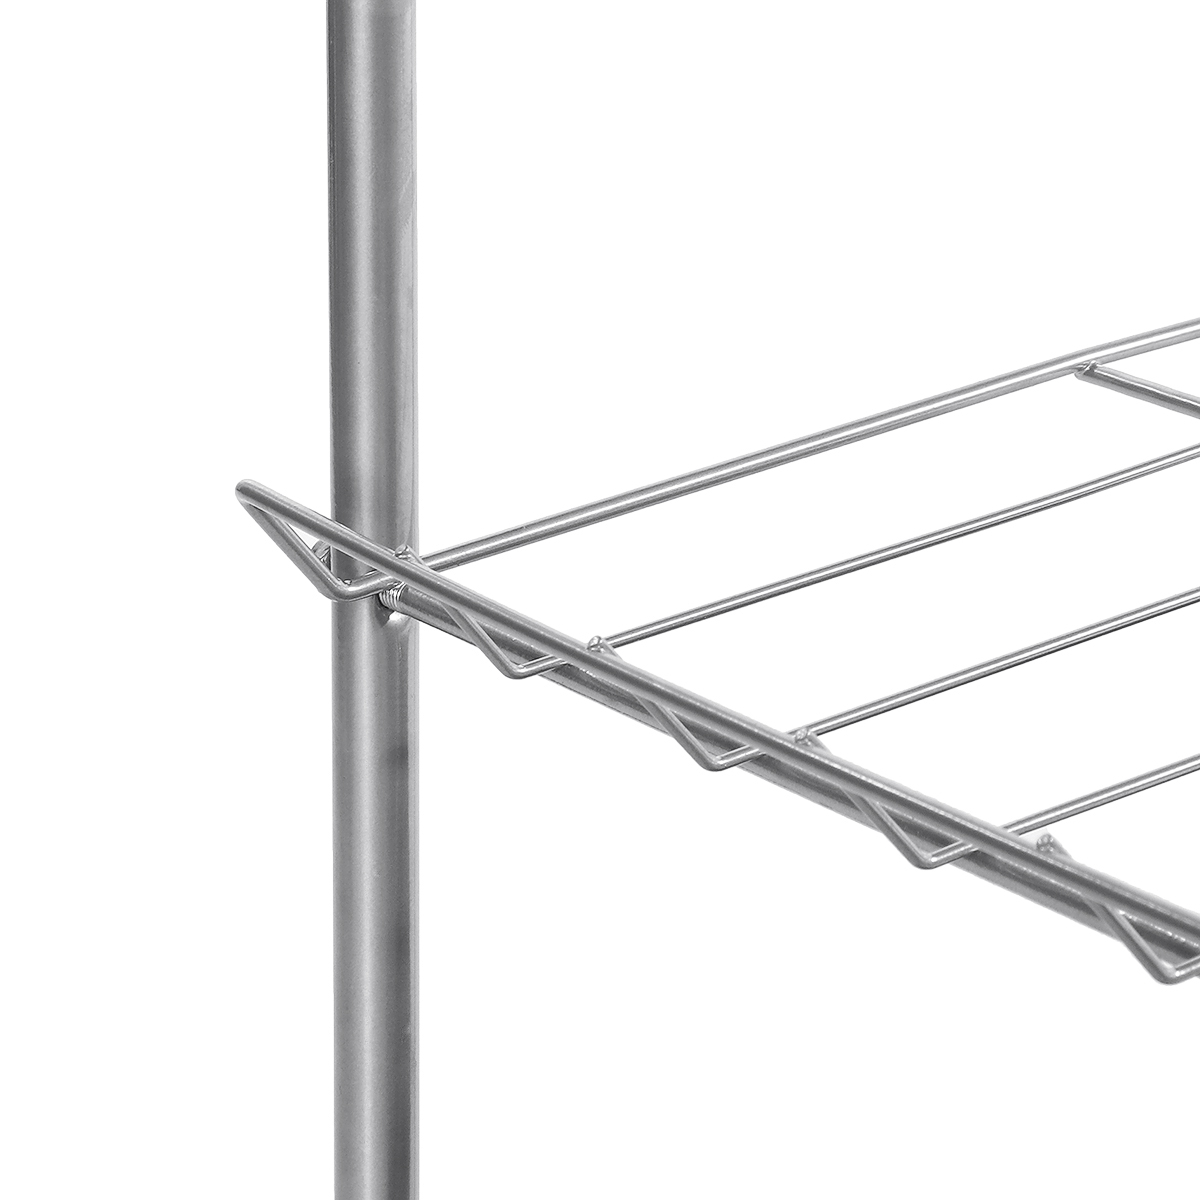 Cabinet-Rack-Storage-Shelf-Shoe-Racks-Organizer-Stand-Metal-Holder-Home-Kitchen-Tool-1617198